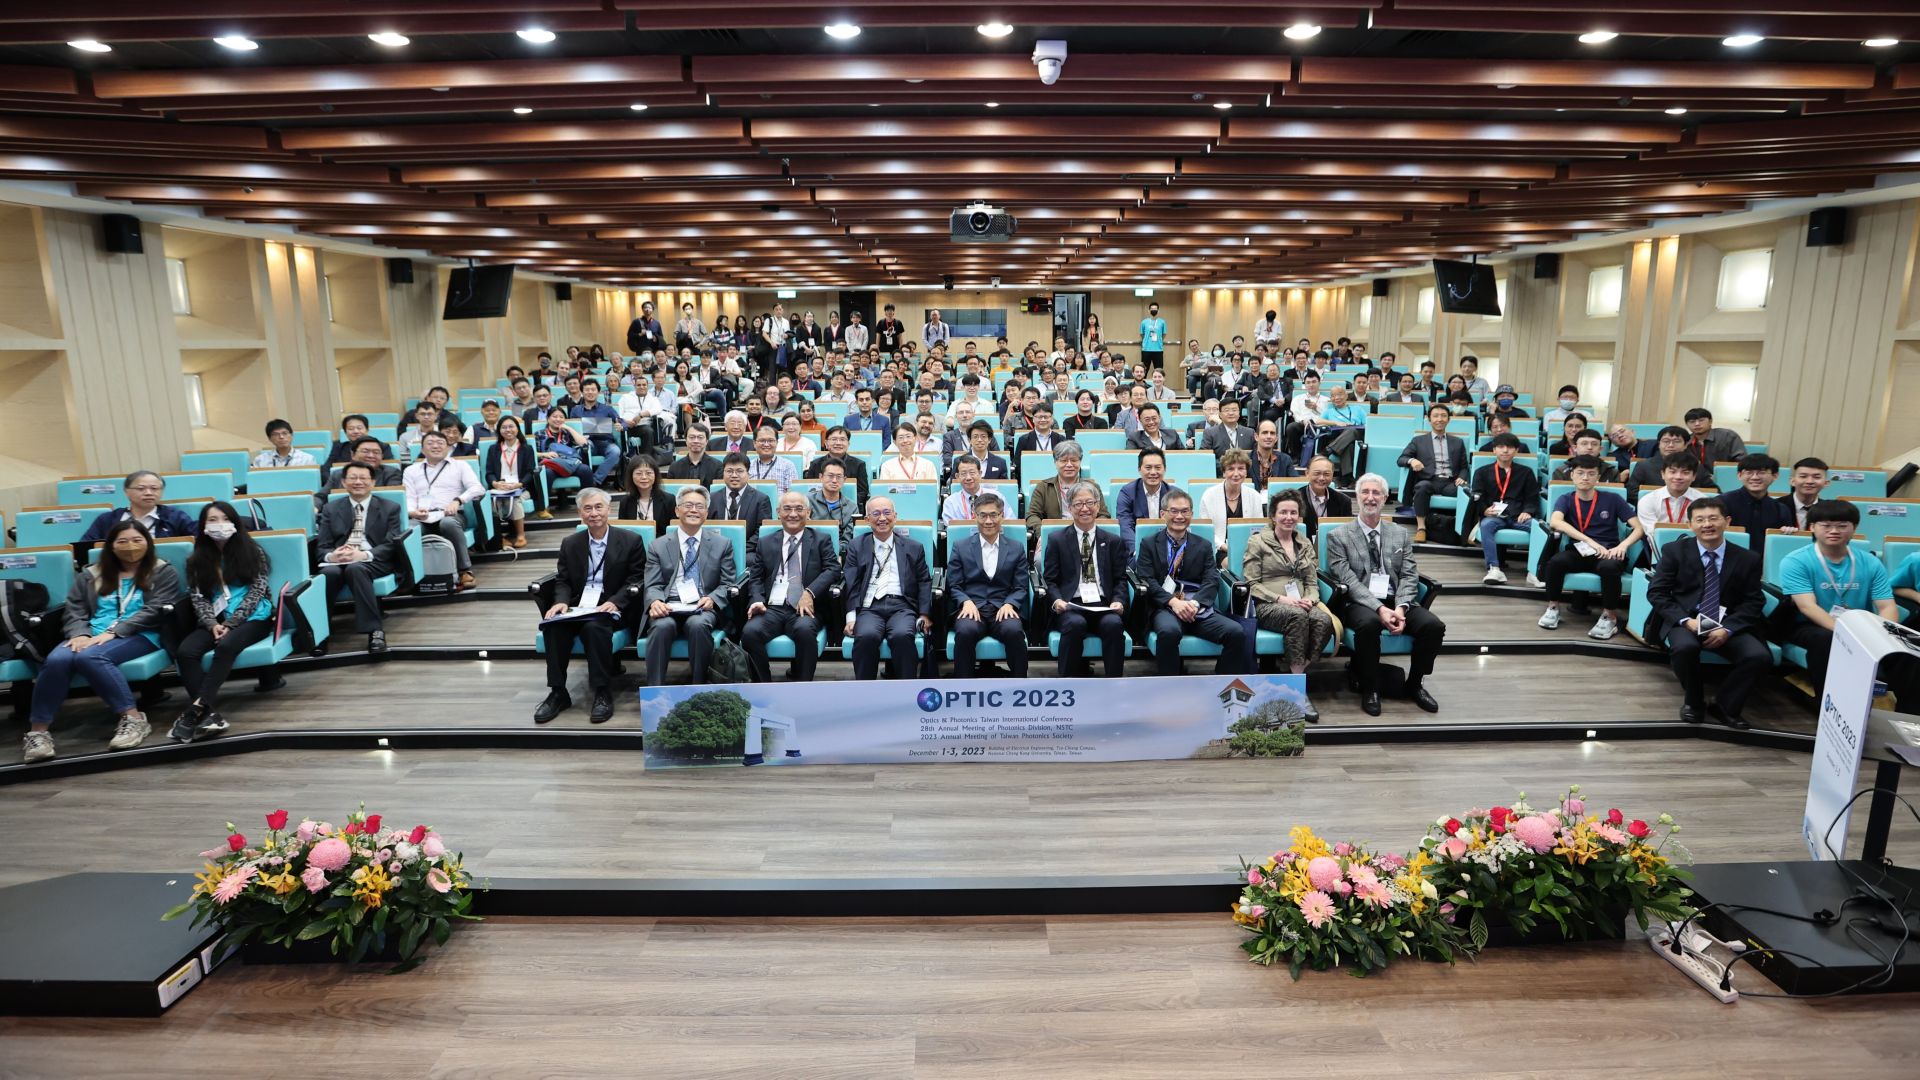 "2023 Optics & Photonics Taiwan International Conference (OPTIC)" at NCKU